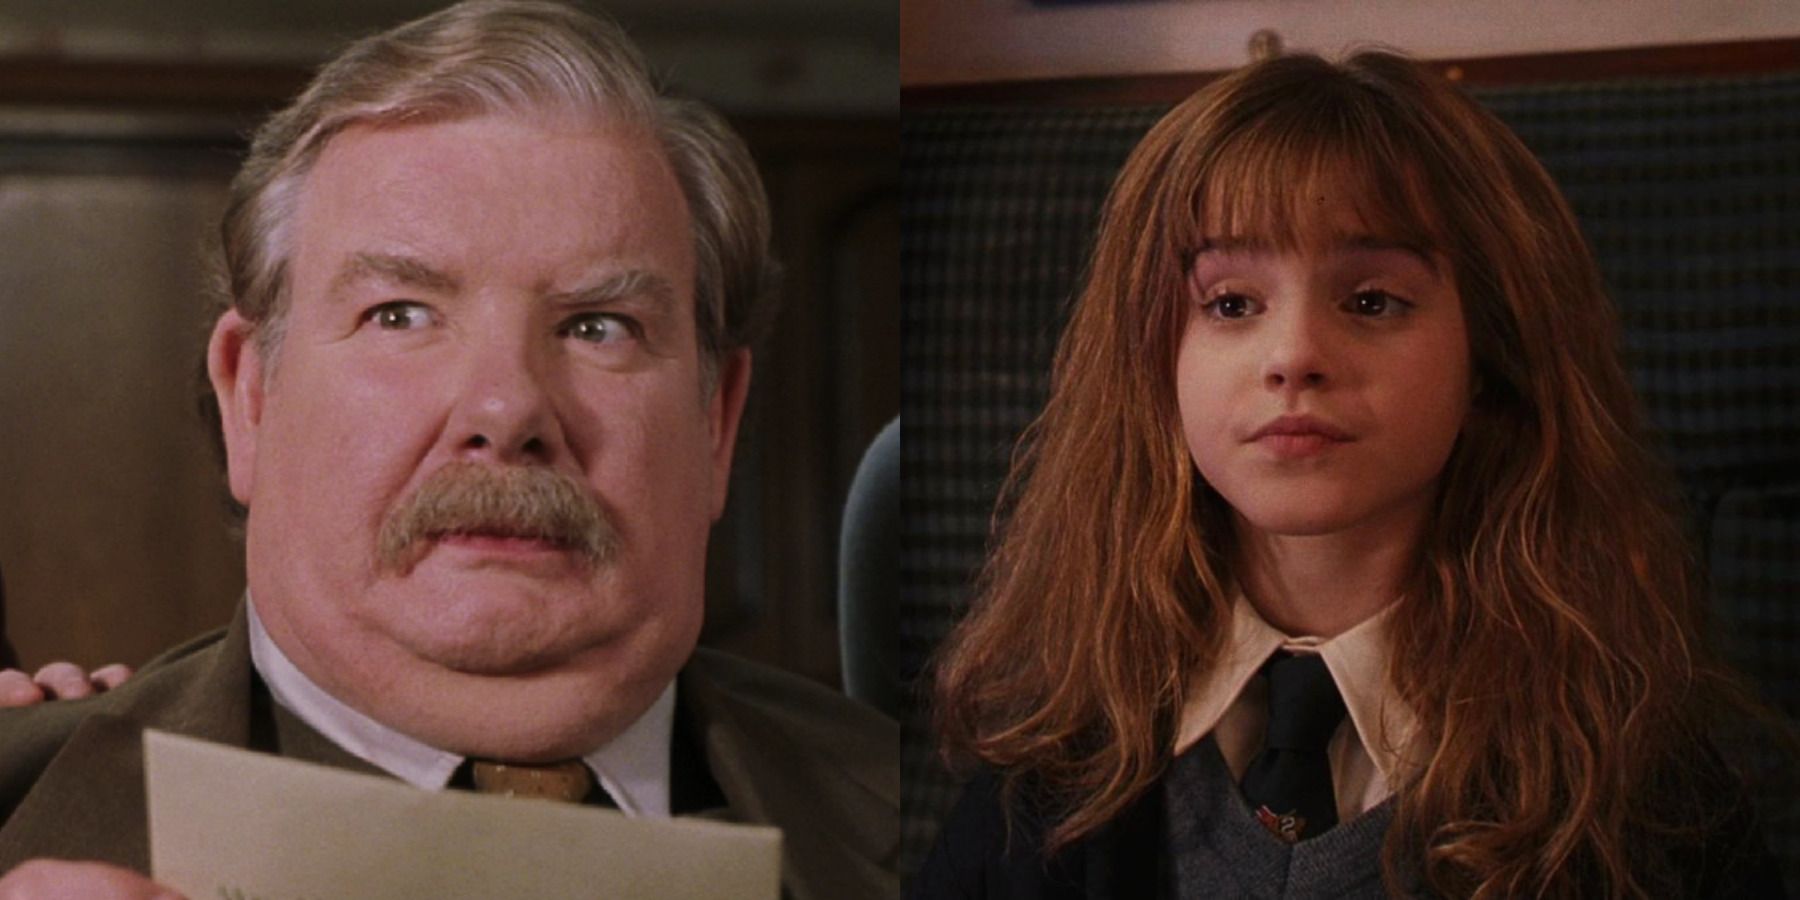 Split image: Vernon (left); and Hermione (right)